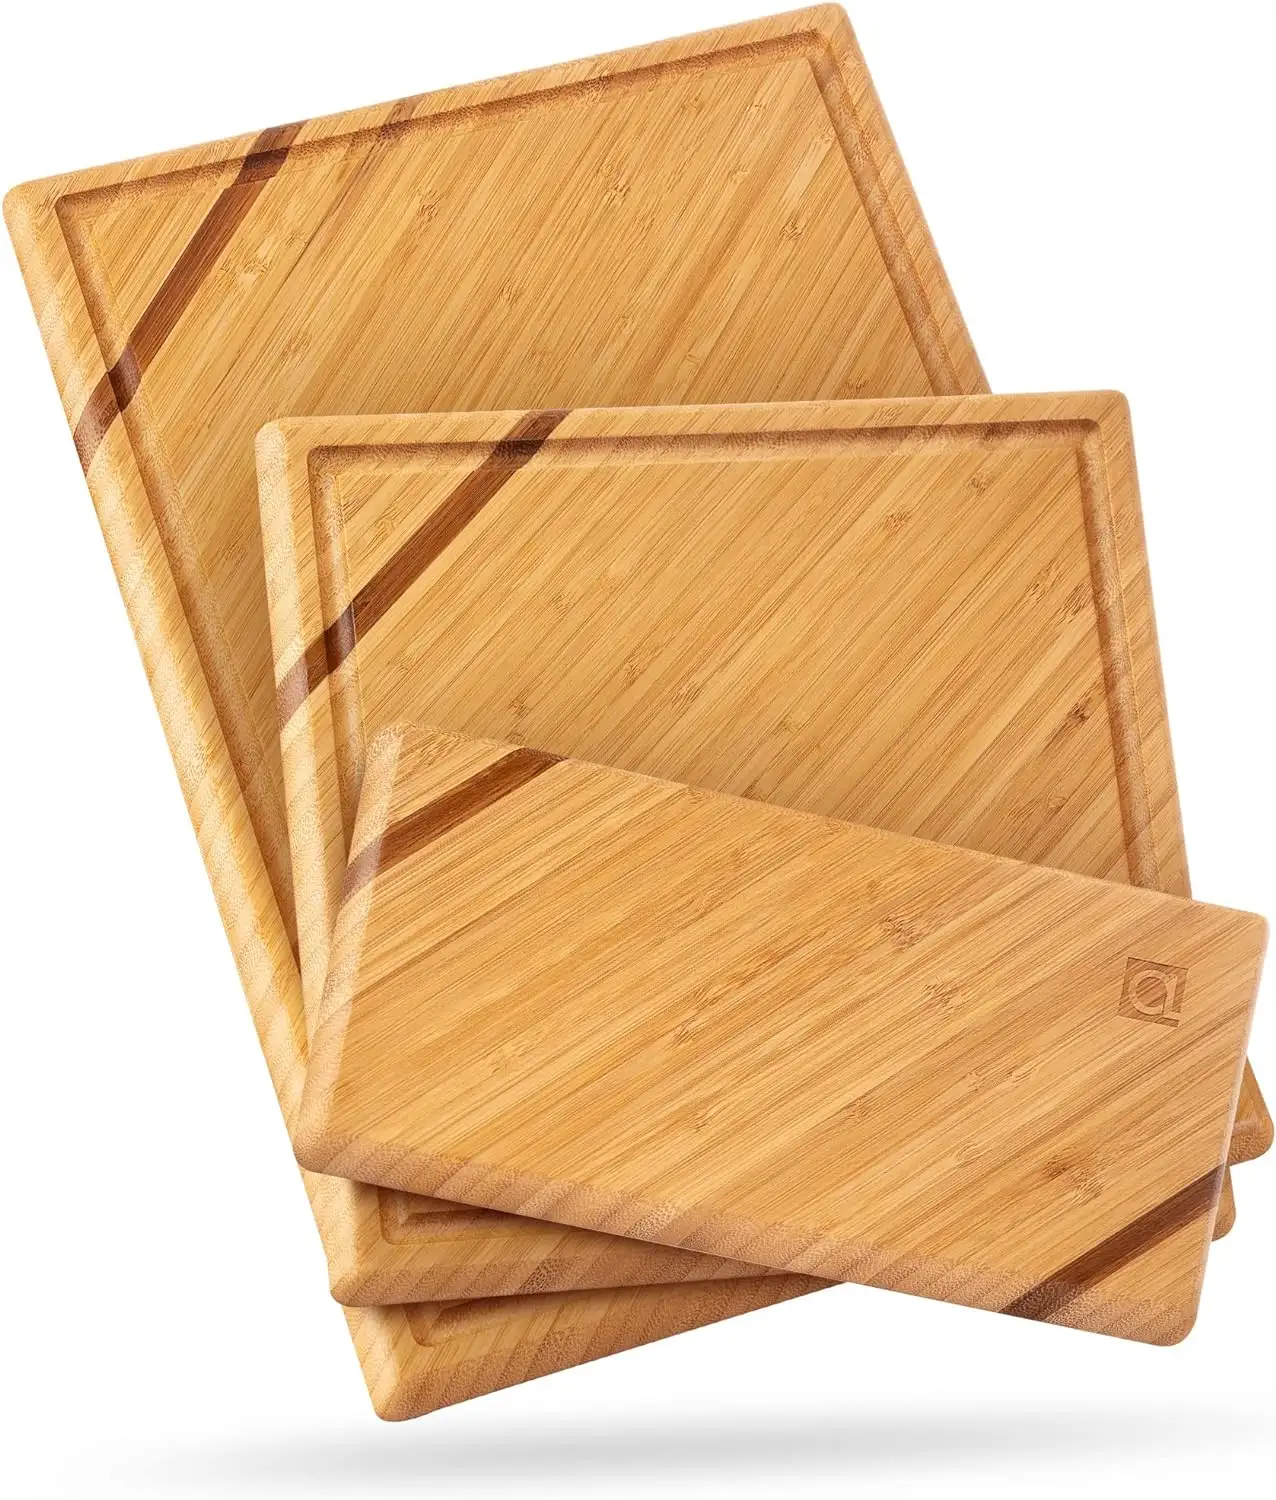 3pcs Bamboo Cutting Board Luxury Organic Wood Cutting Boards for Kitchen